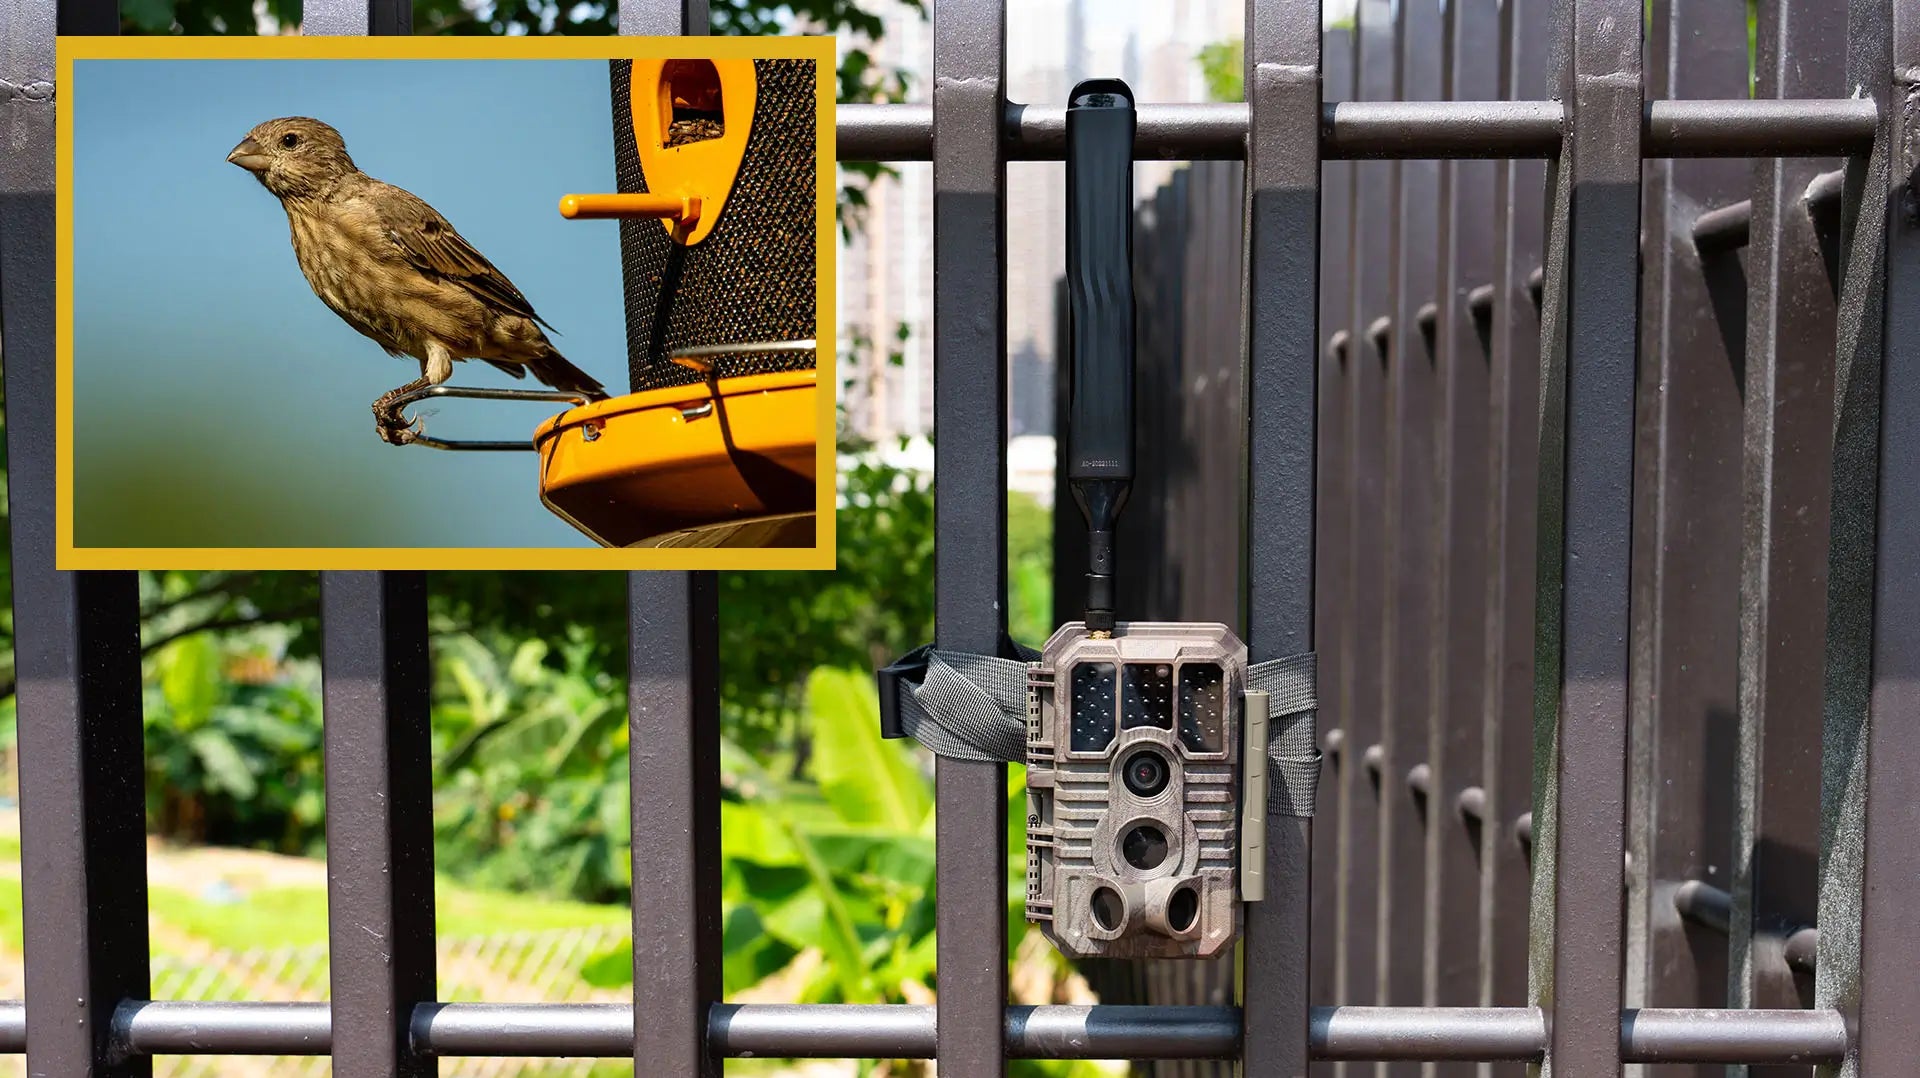 Backyard Birdwatching Joy: Explore the World of Birds in Your Own Backyard with GardePro Trail Camera